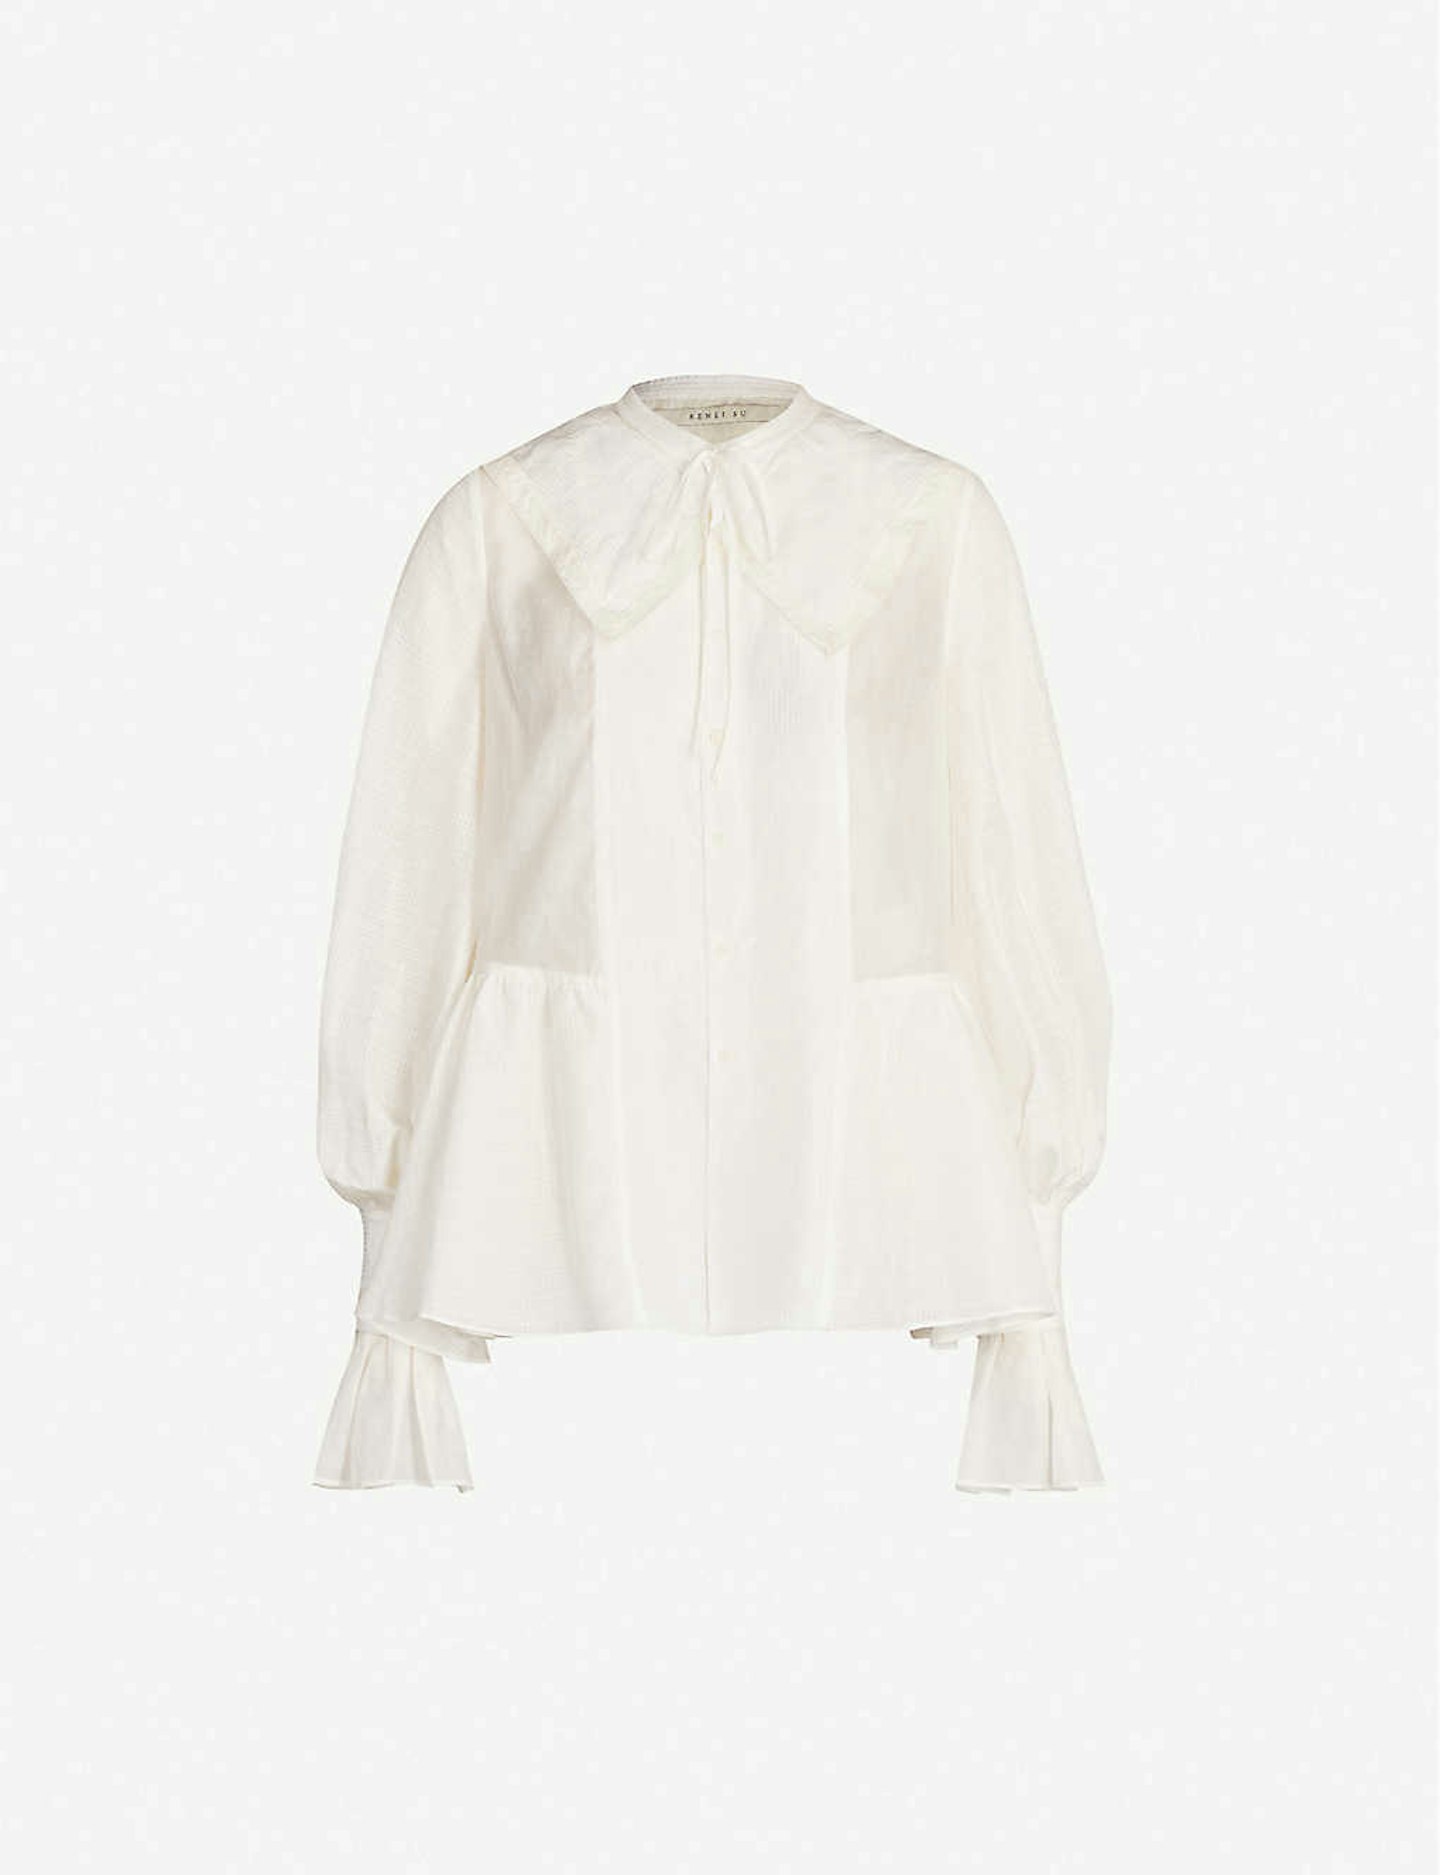 Renli Su, Oversized Collar Silk And Linen-Blend Blouse, £475